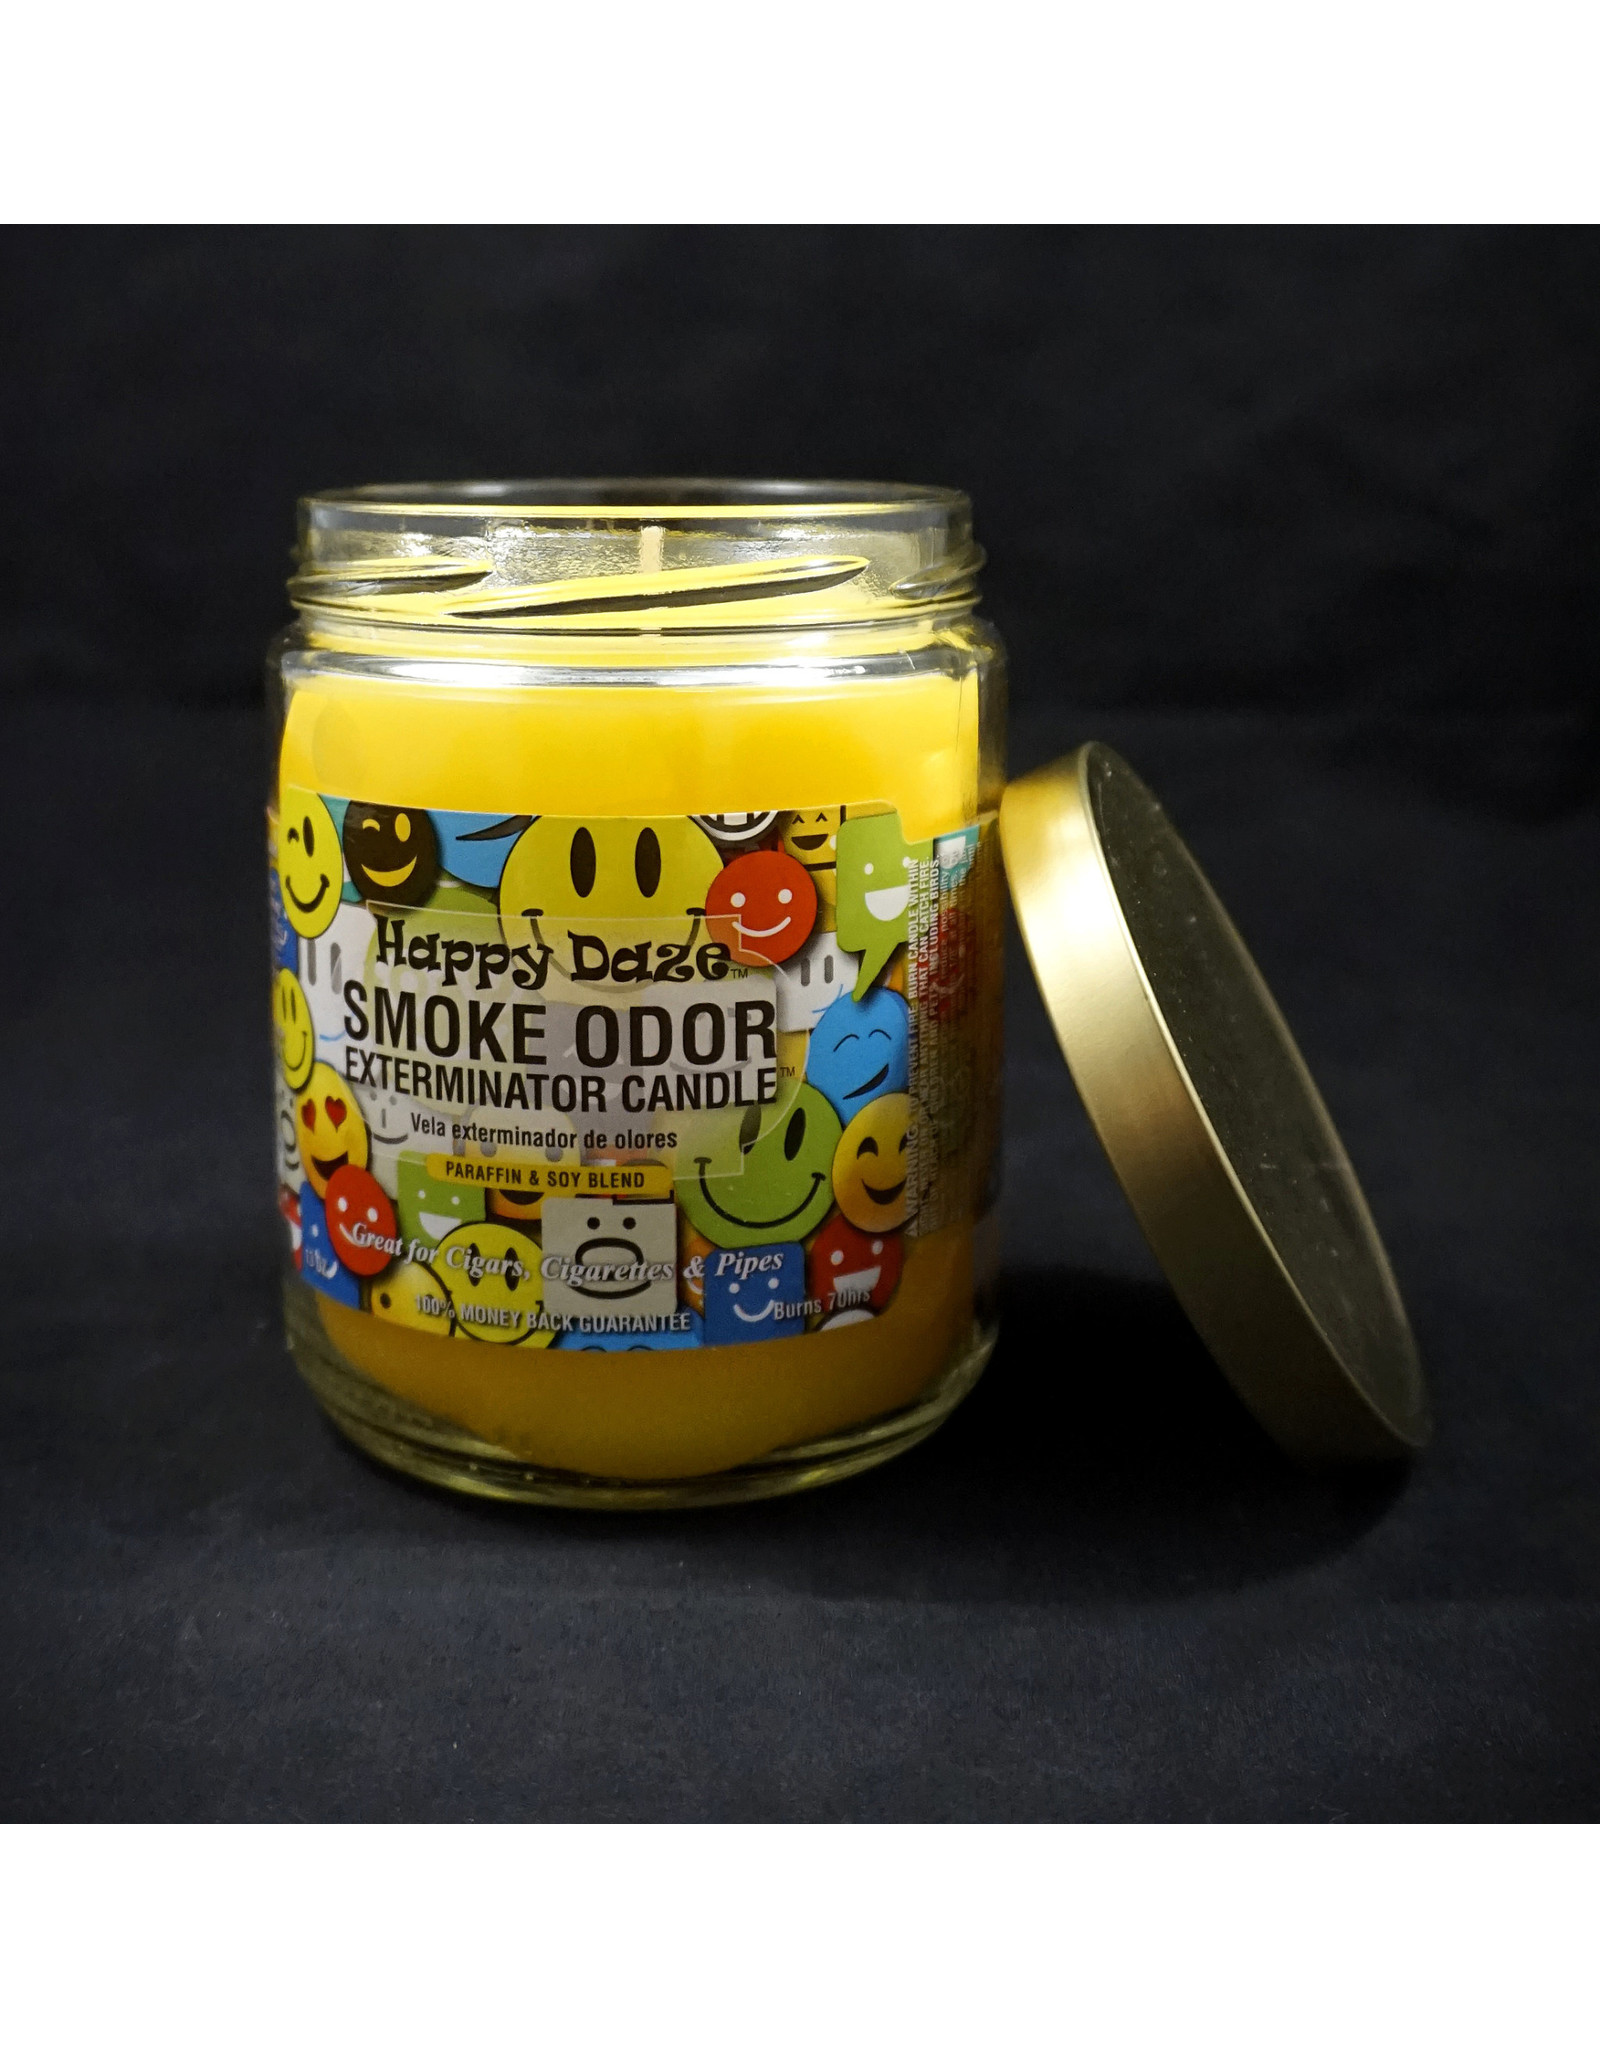 Smoke Odor Smoke Odor Candle - Happy Daze